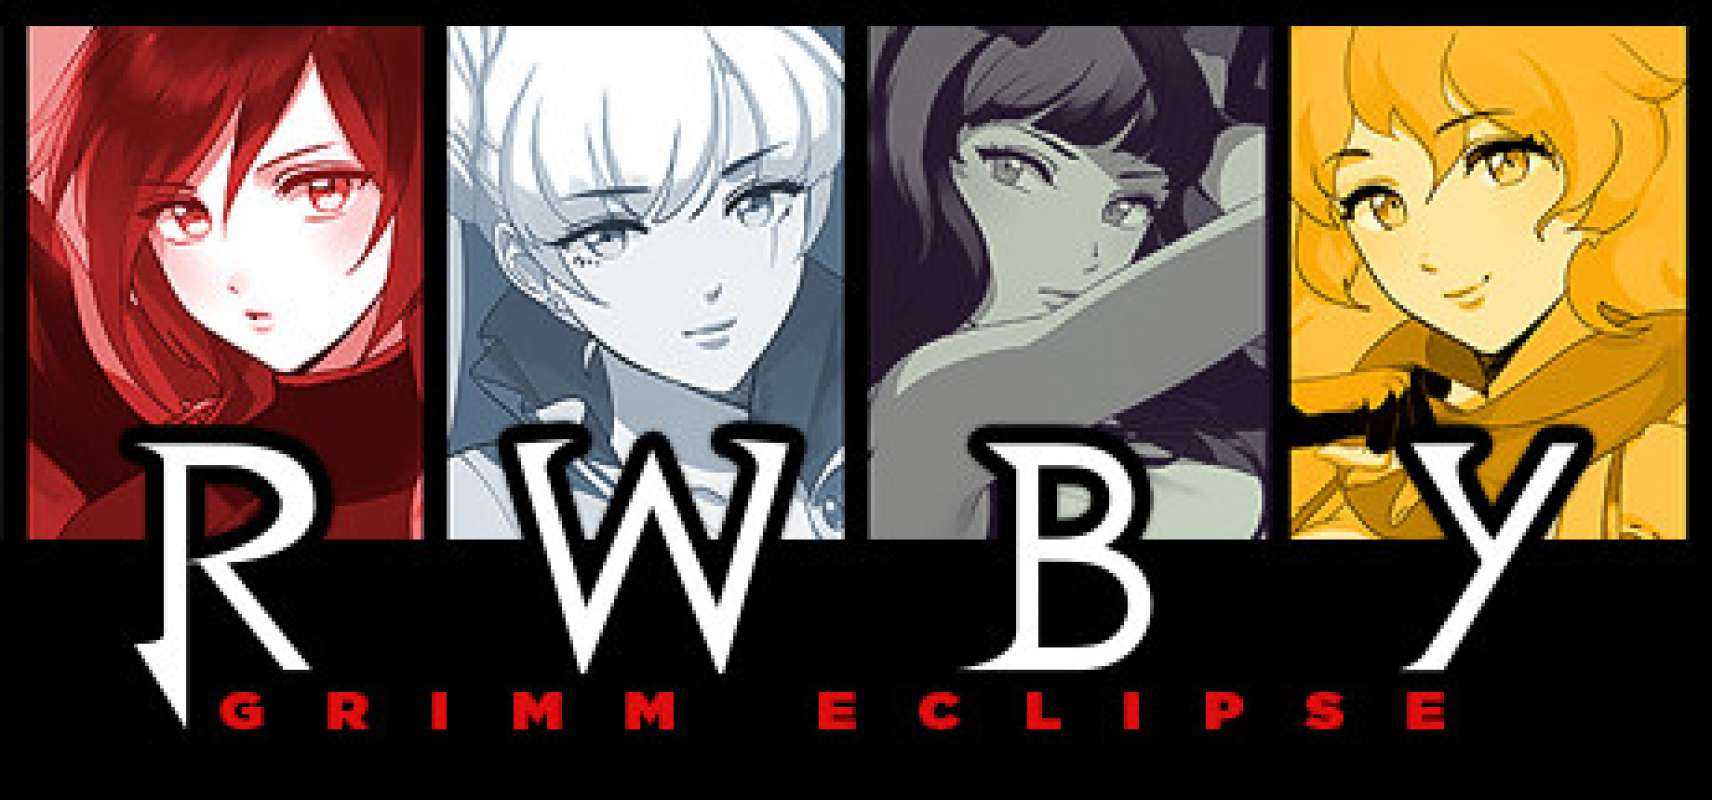 RWBY: Grimm Eclipse